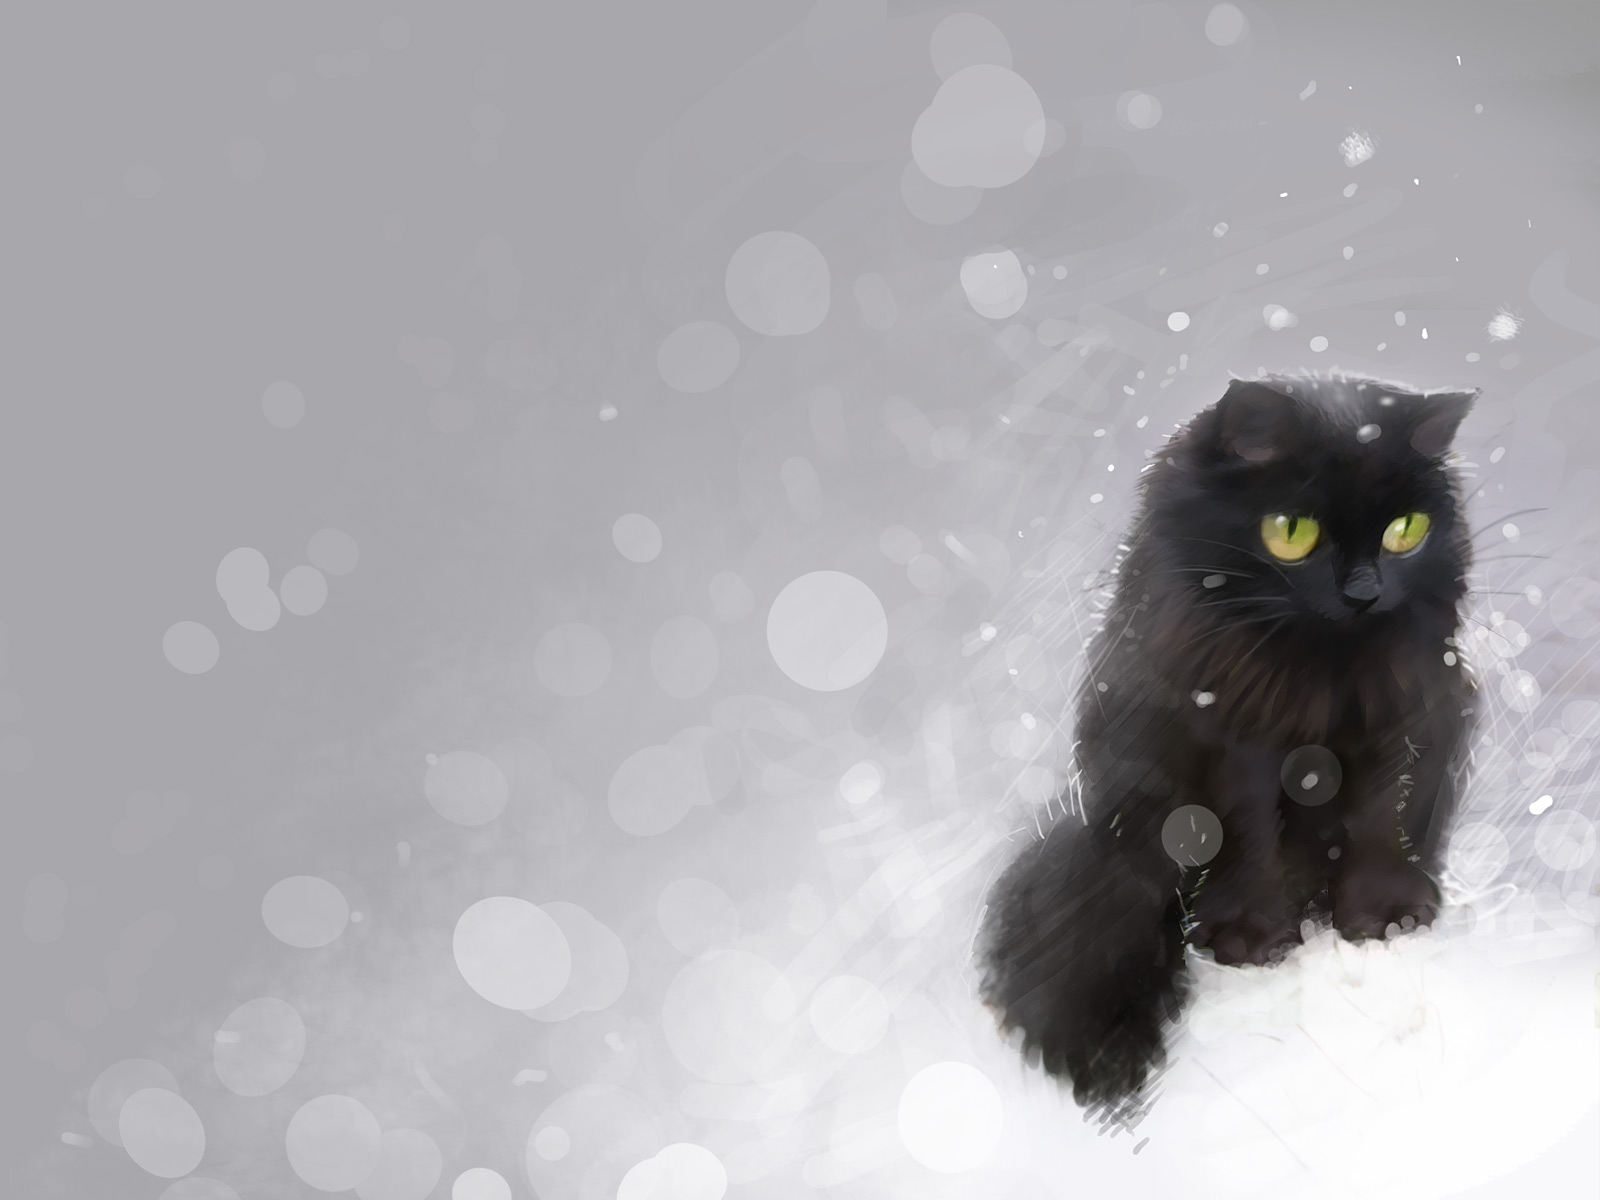 Black cat gracefully walking through a snowy landscape